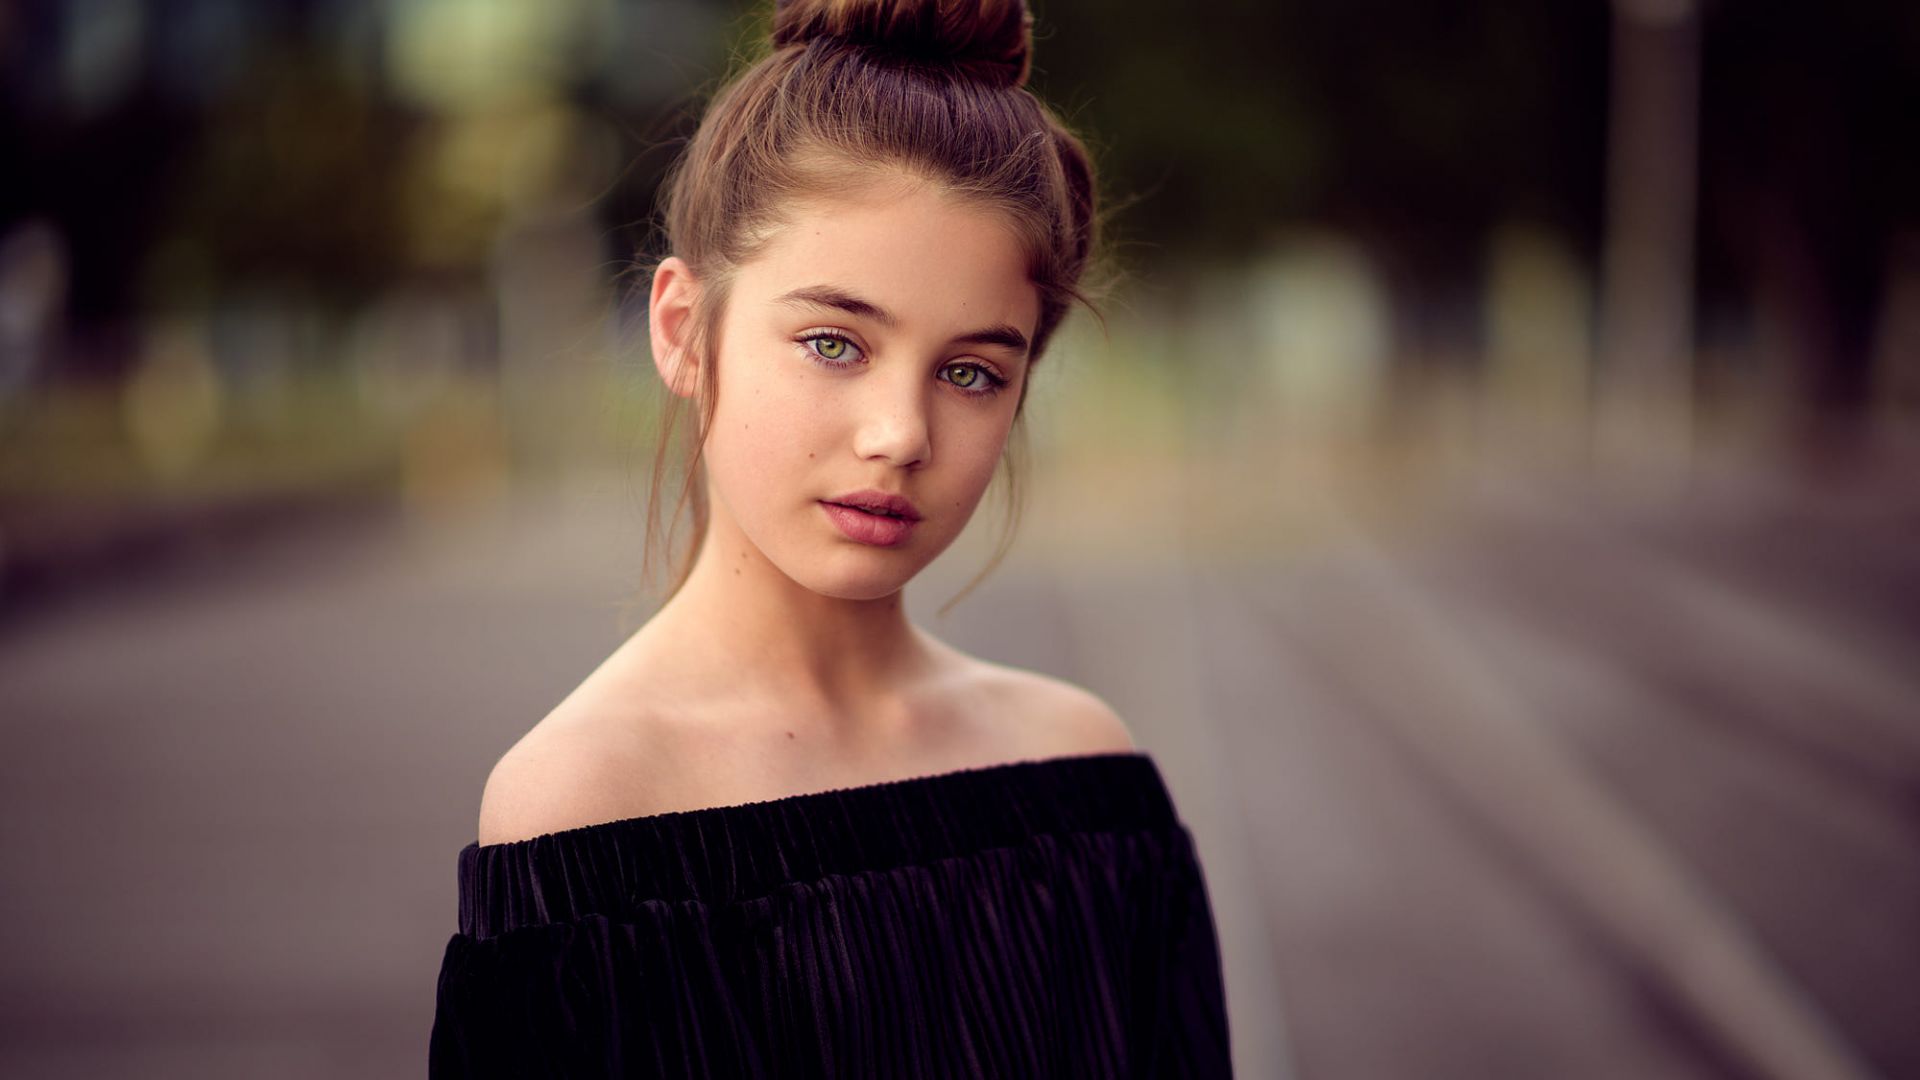 Wallpaper Cute face, girl model, black dress